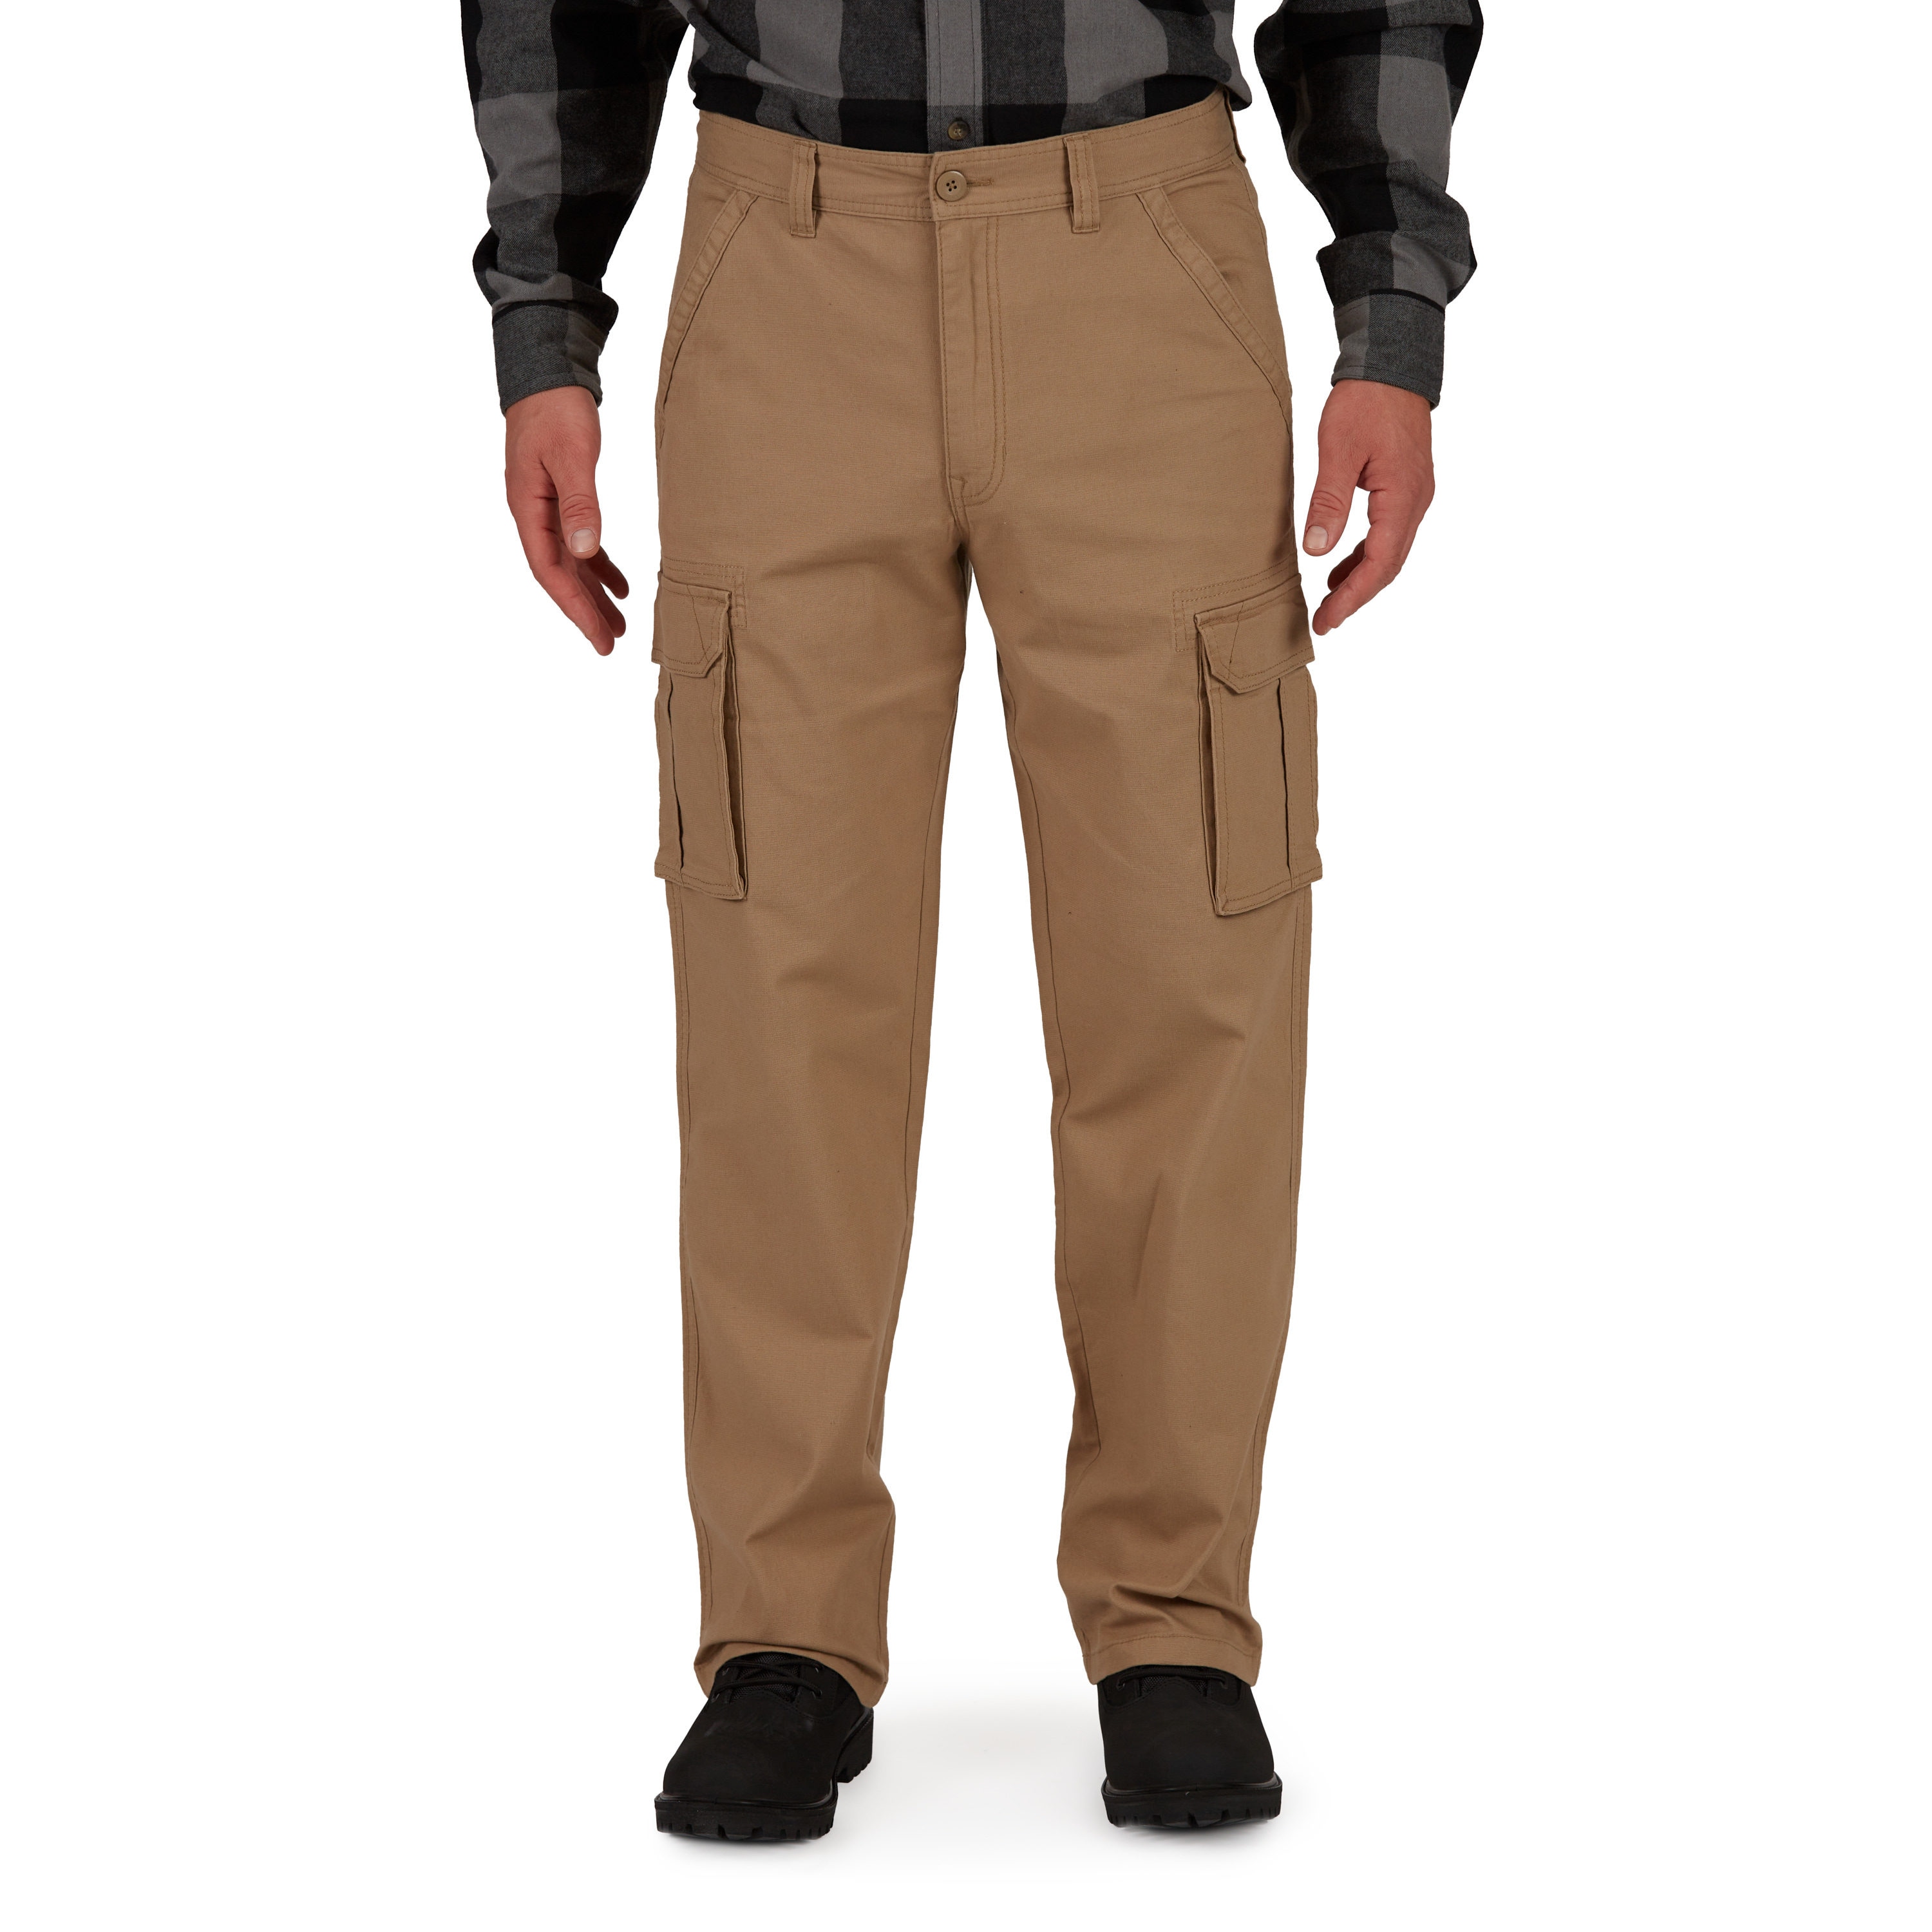 LA police gear elastic basic operator khaki 30 x 36 tactical pants | eBay